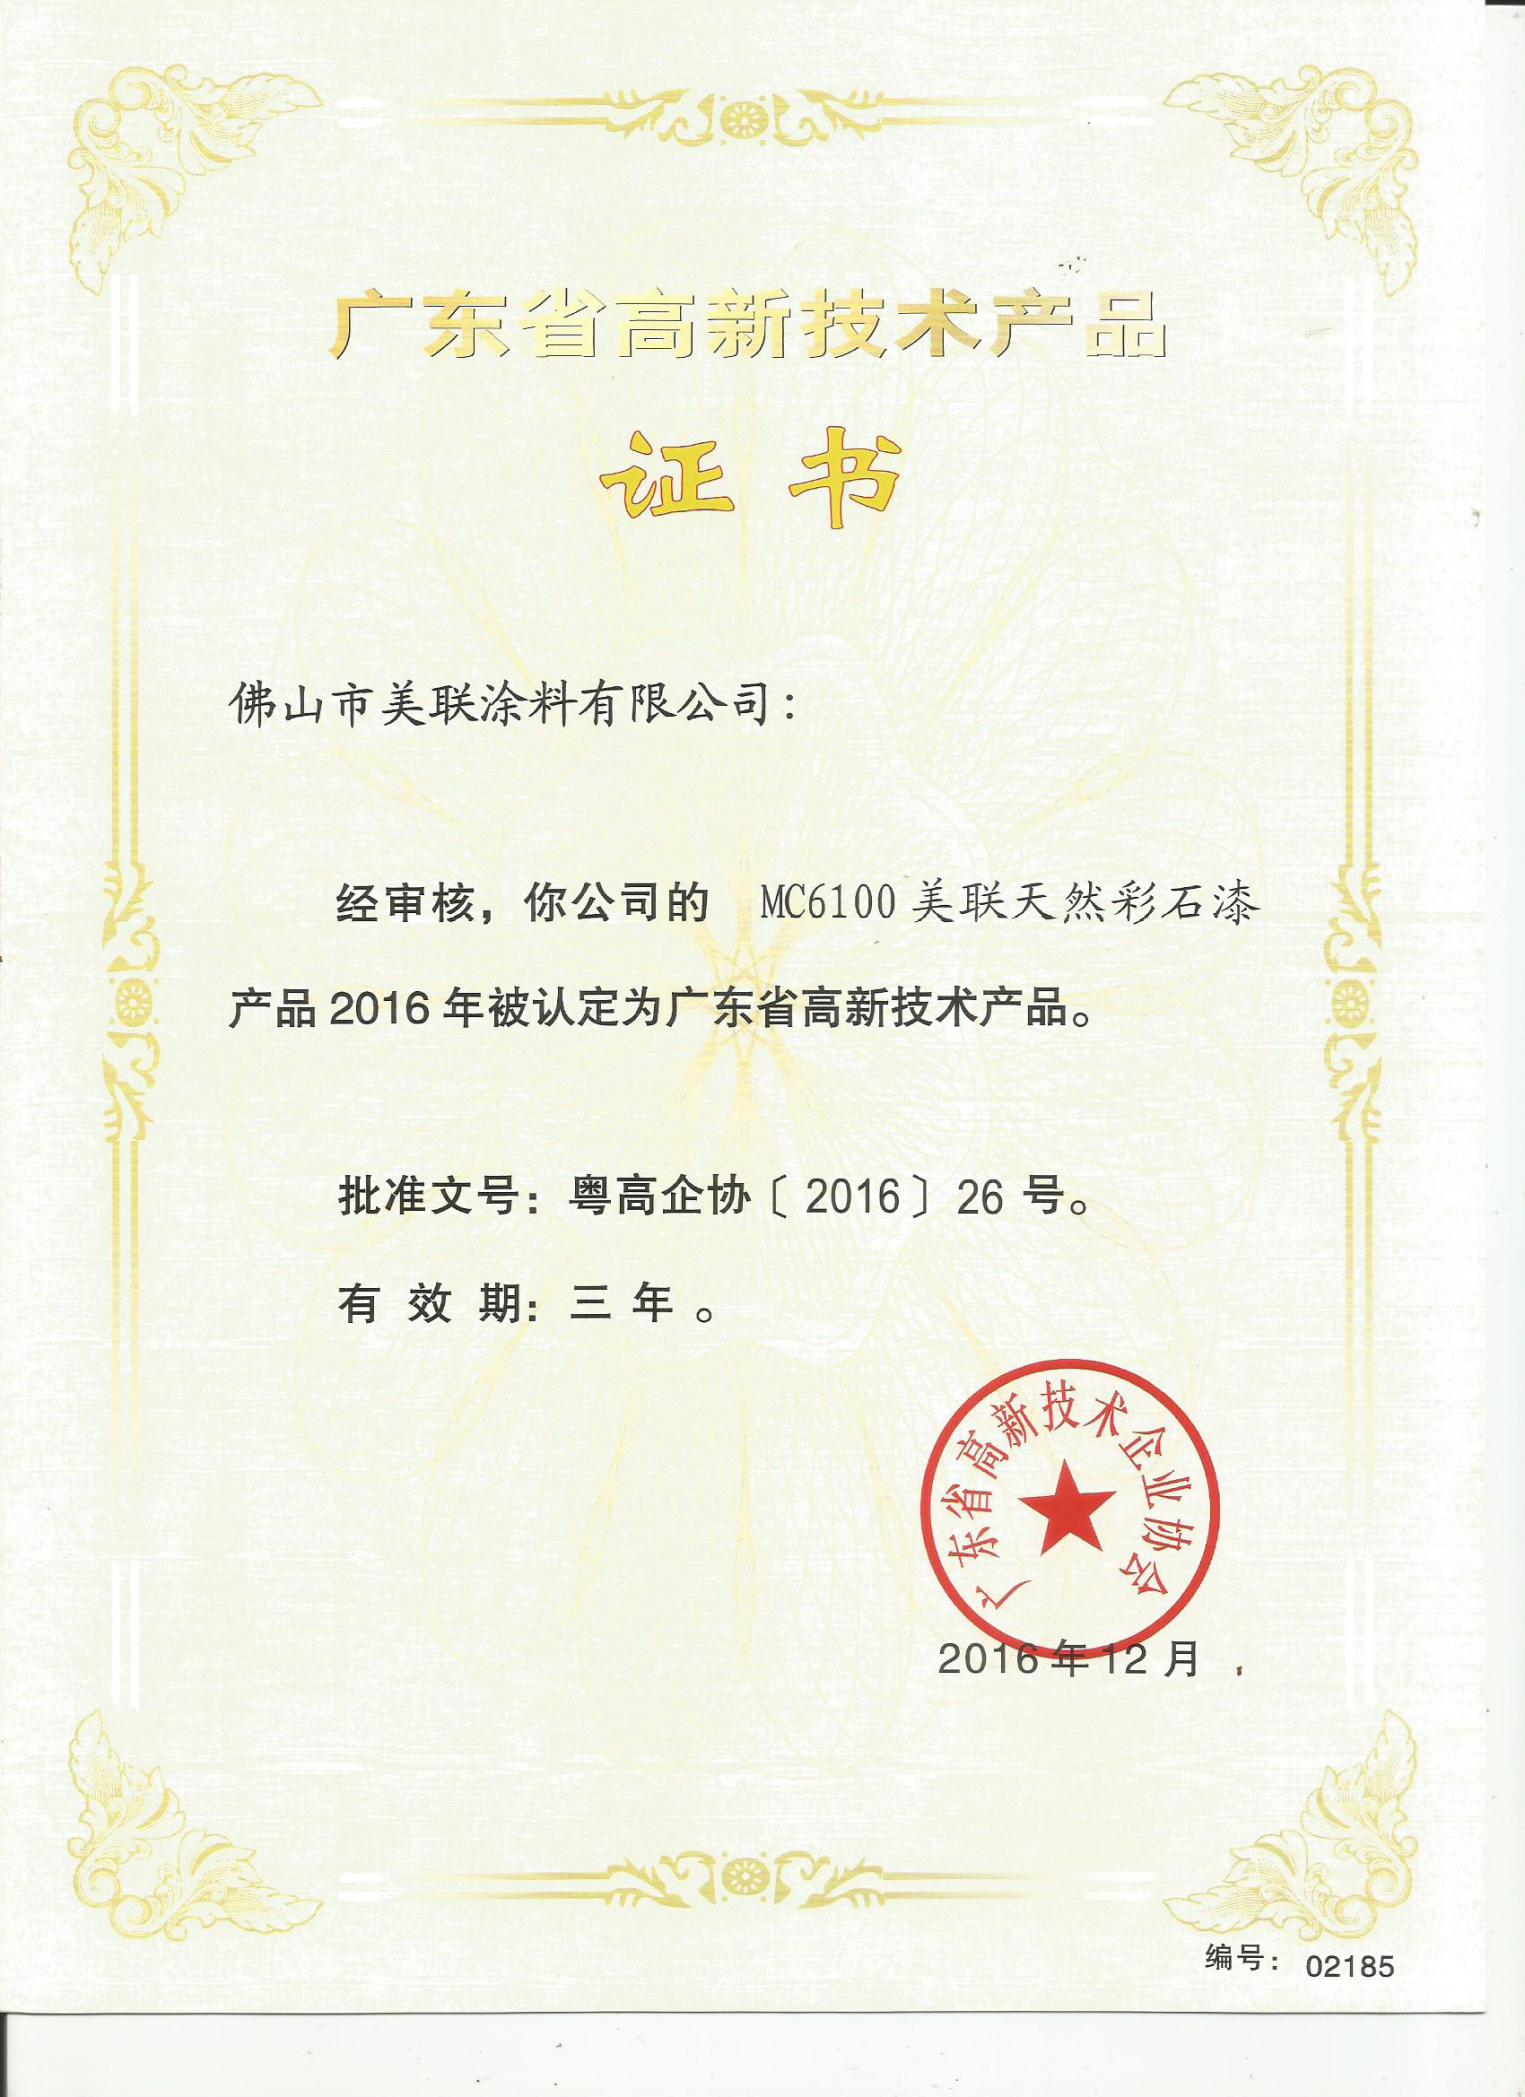 MC6100美聯天然彩石漆認定為廣東省高新技術產品-美聯榮譽